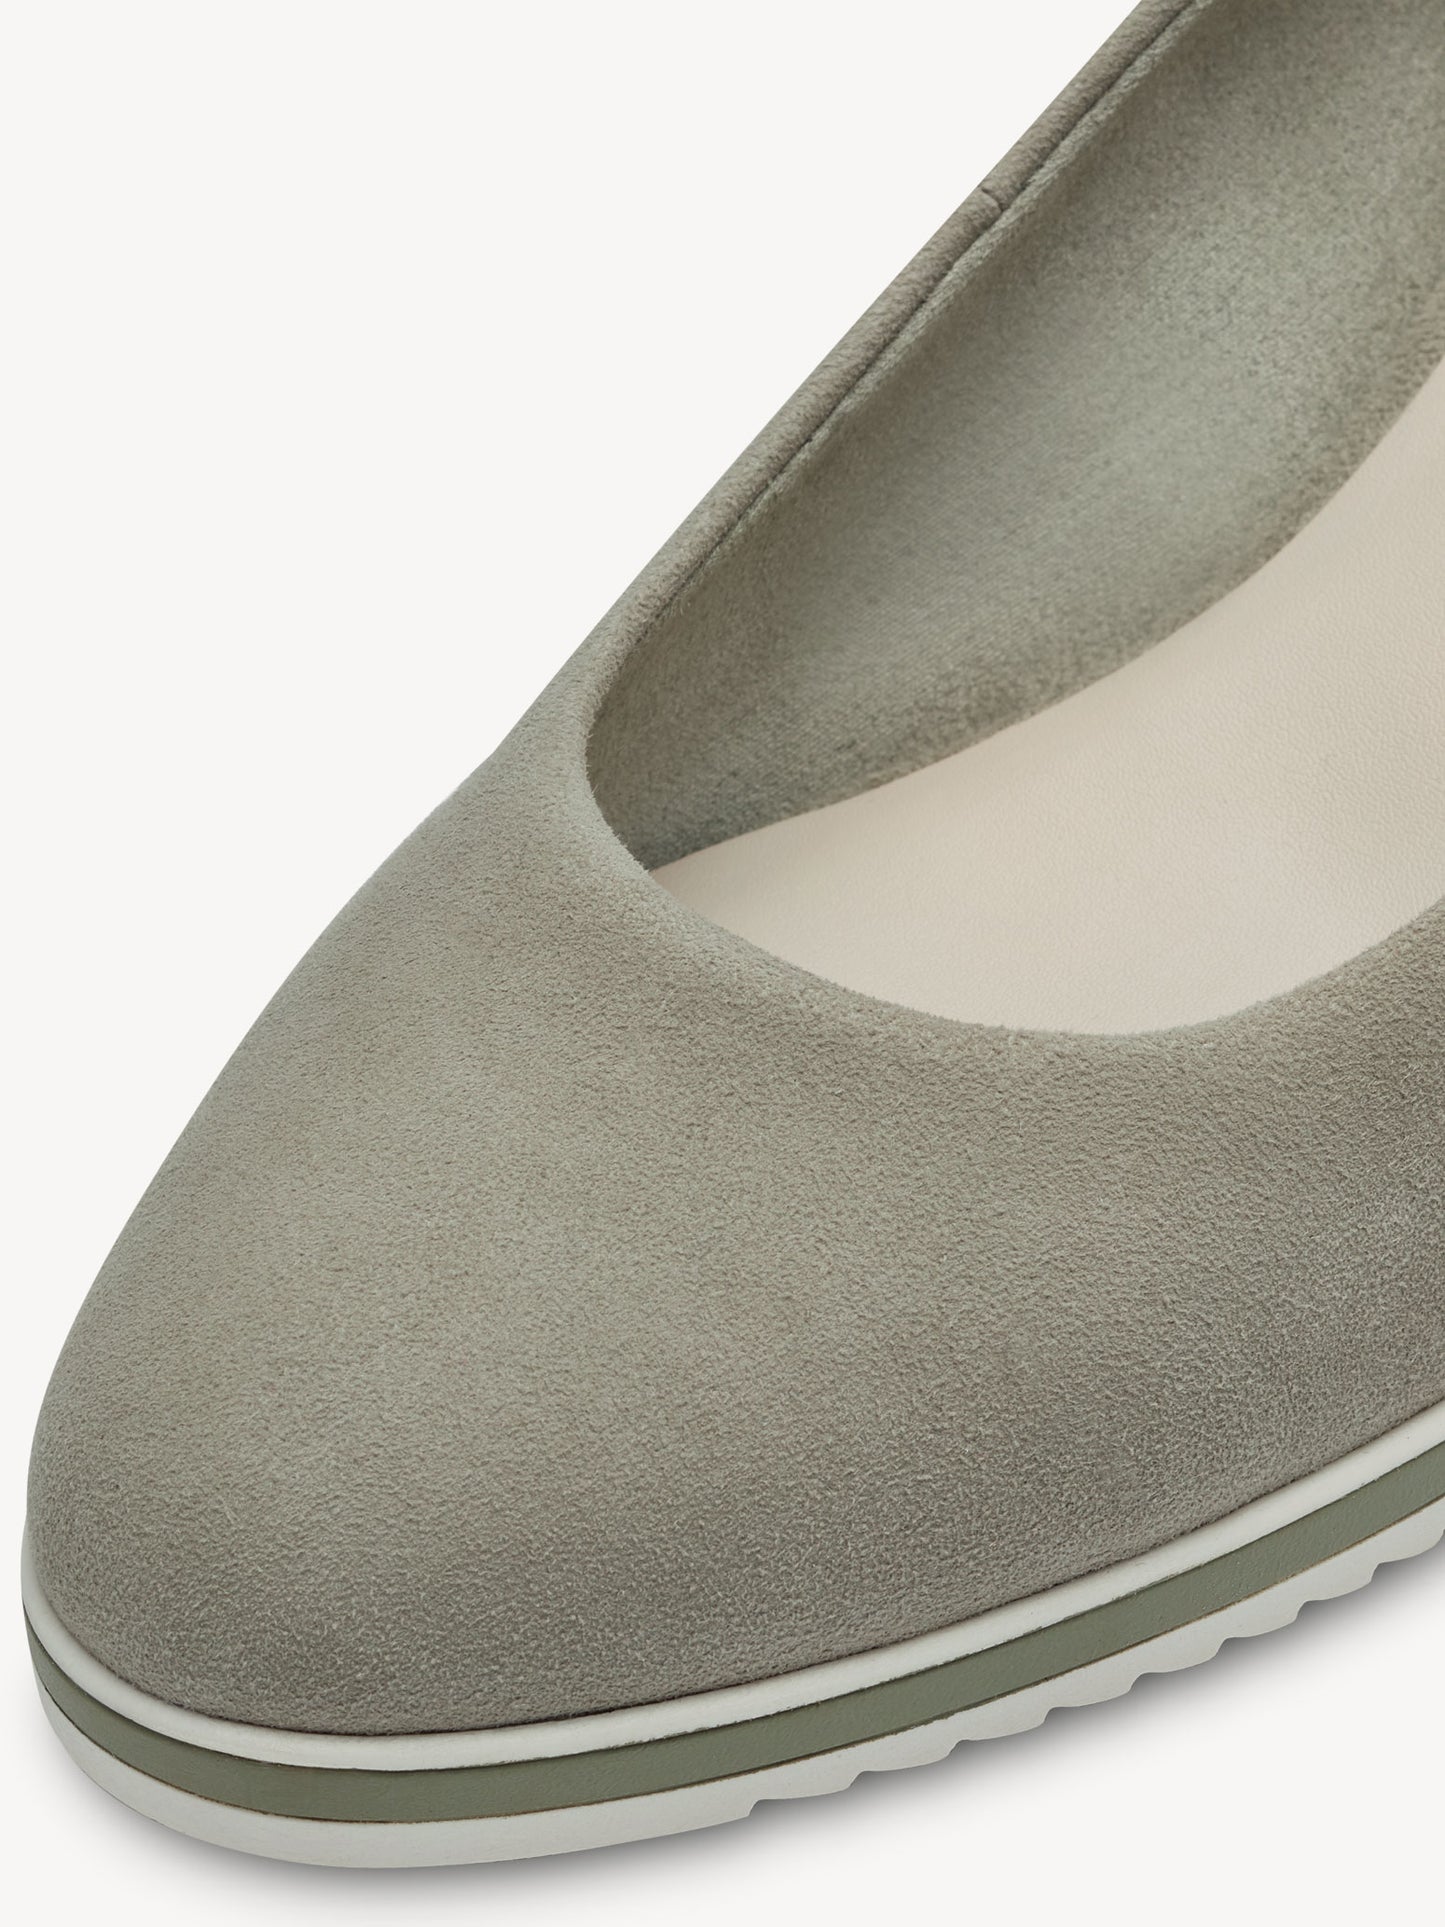 Tamaris Women's 1-22303-42 Leather Wedge Heel Pump Shoes Sage Green